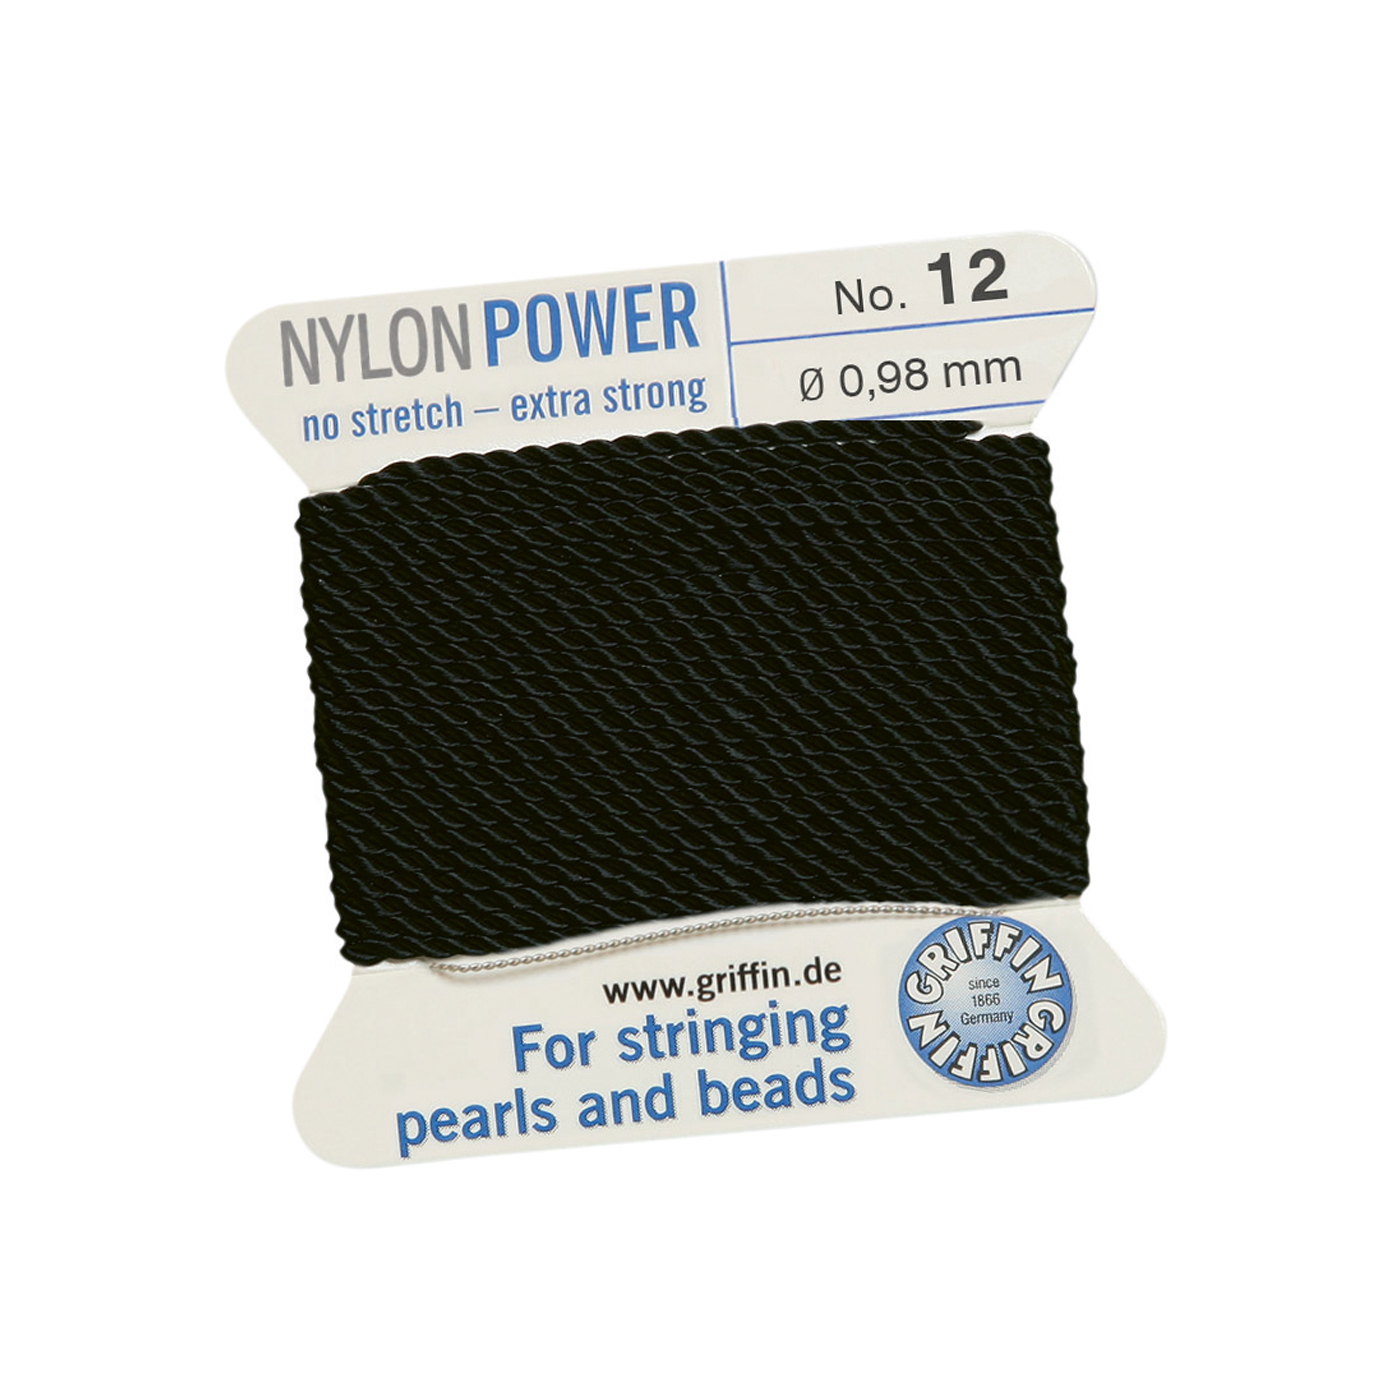 Bead Cord NylonPower, Black, No. 12 - 2 m